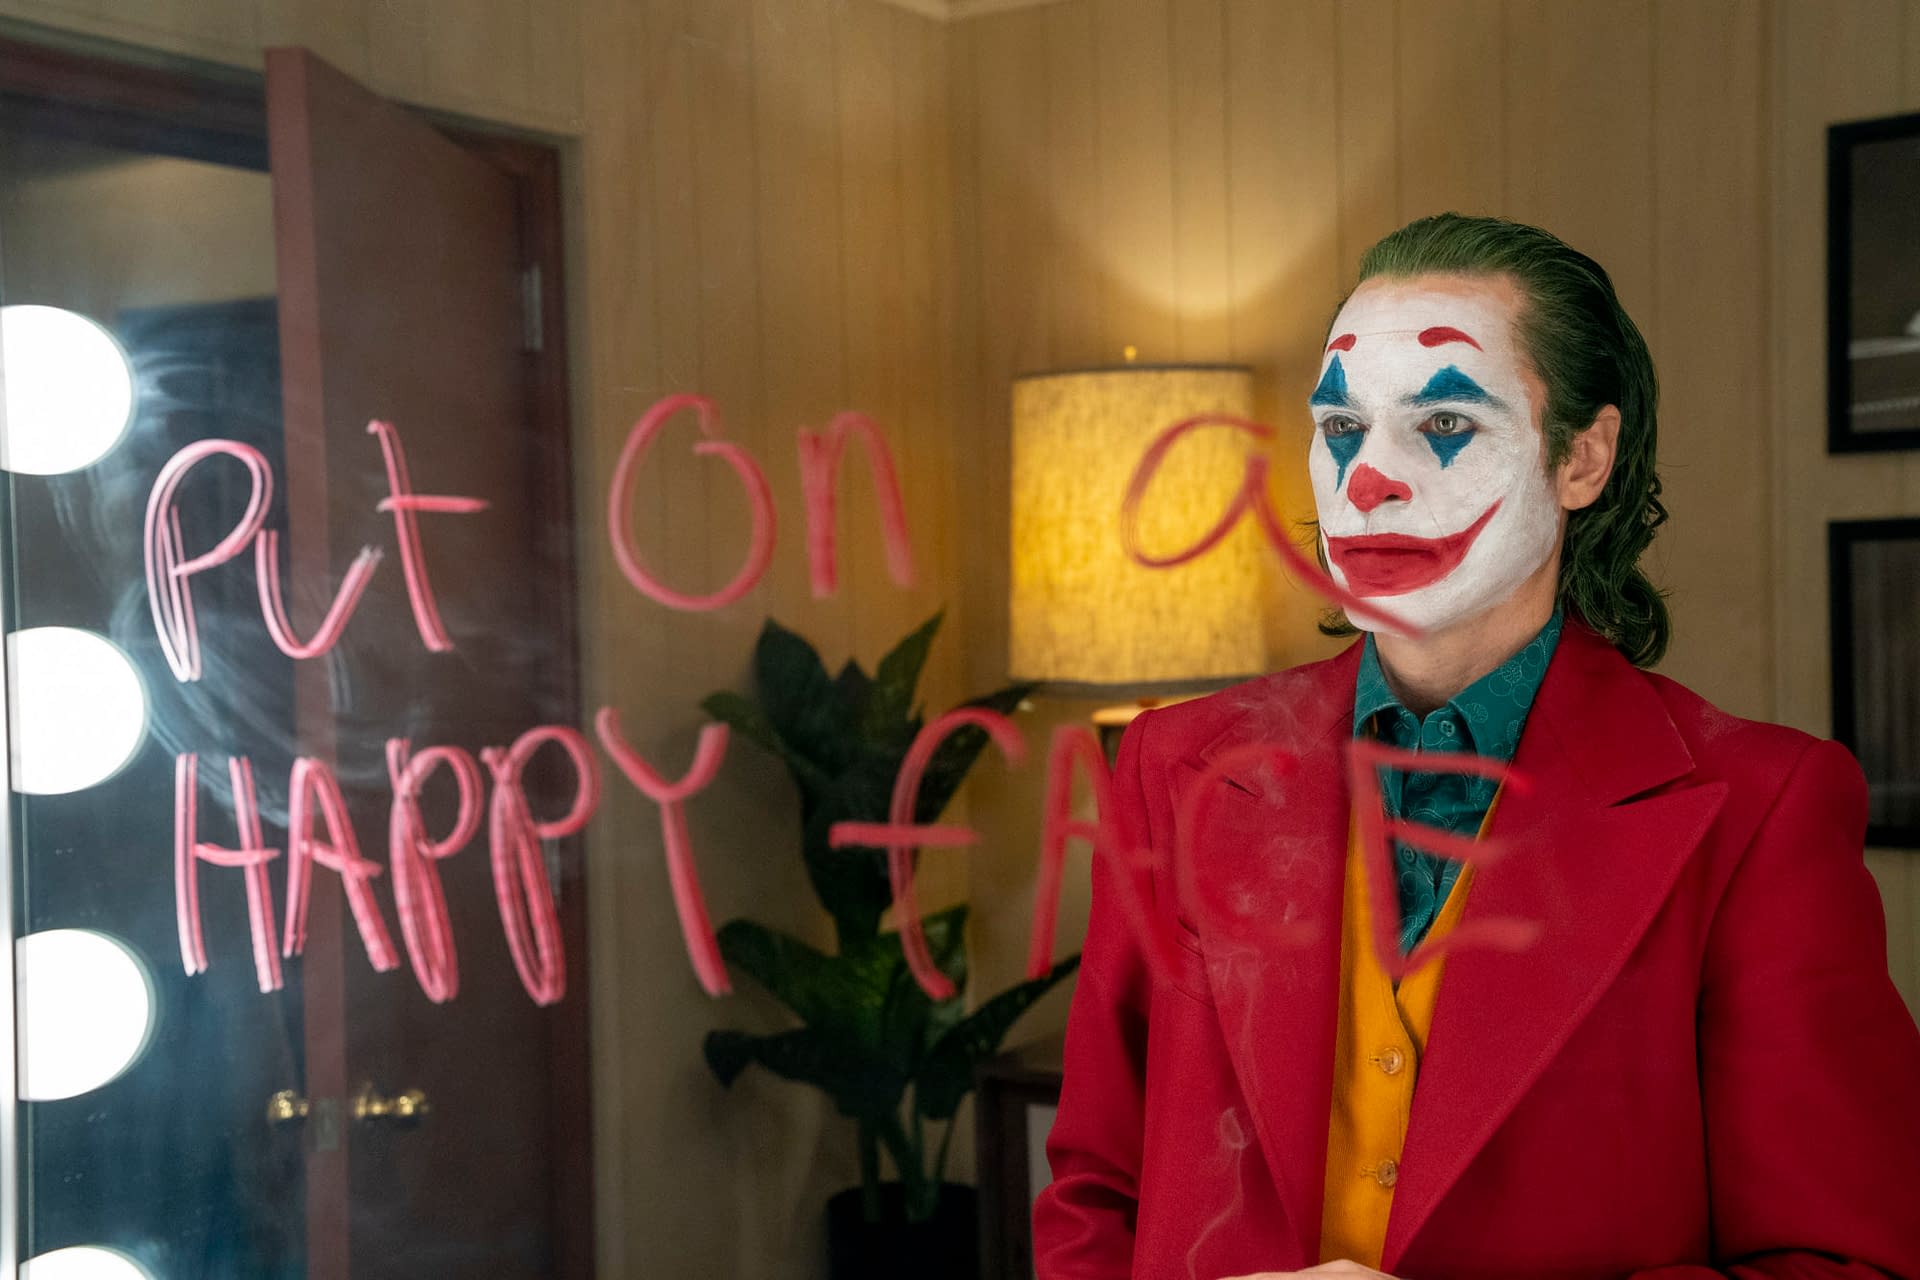 Warner Bros. Releases a New Batch of "Joker" Promotional Images